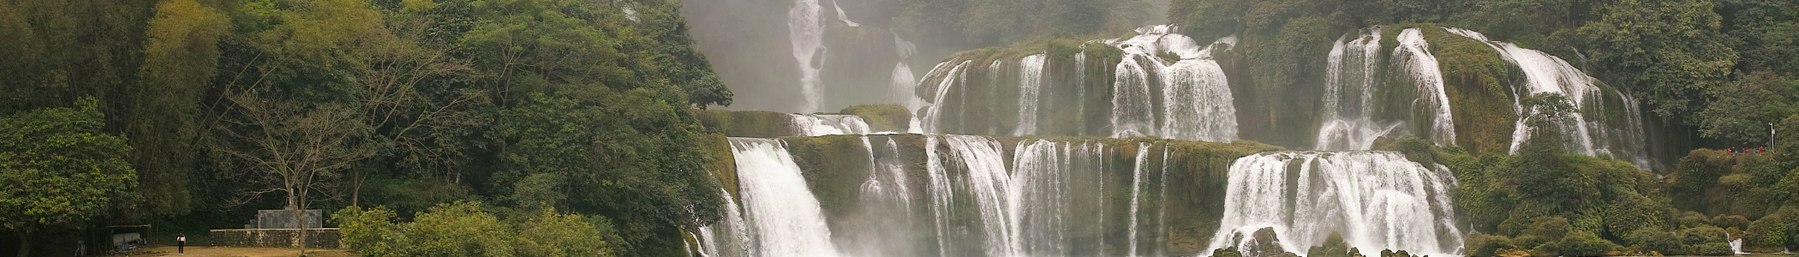 Cao Bằng banner Bản Giốc waterfalls.jpg